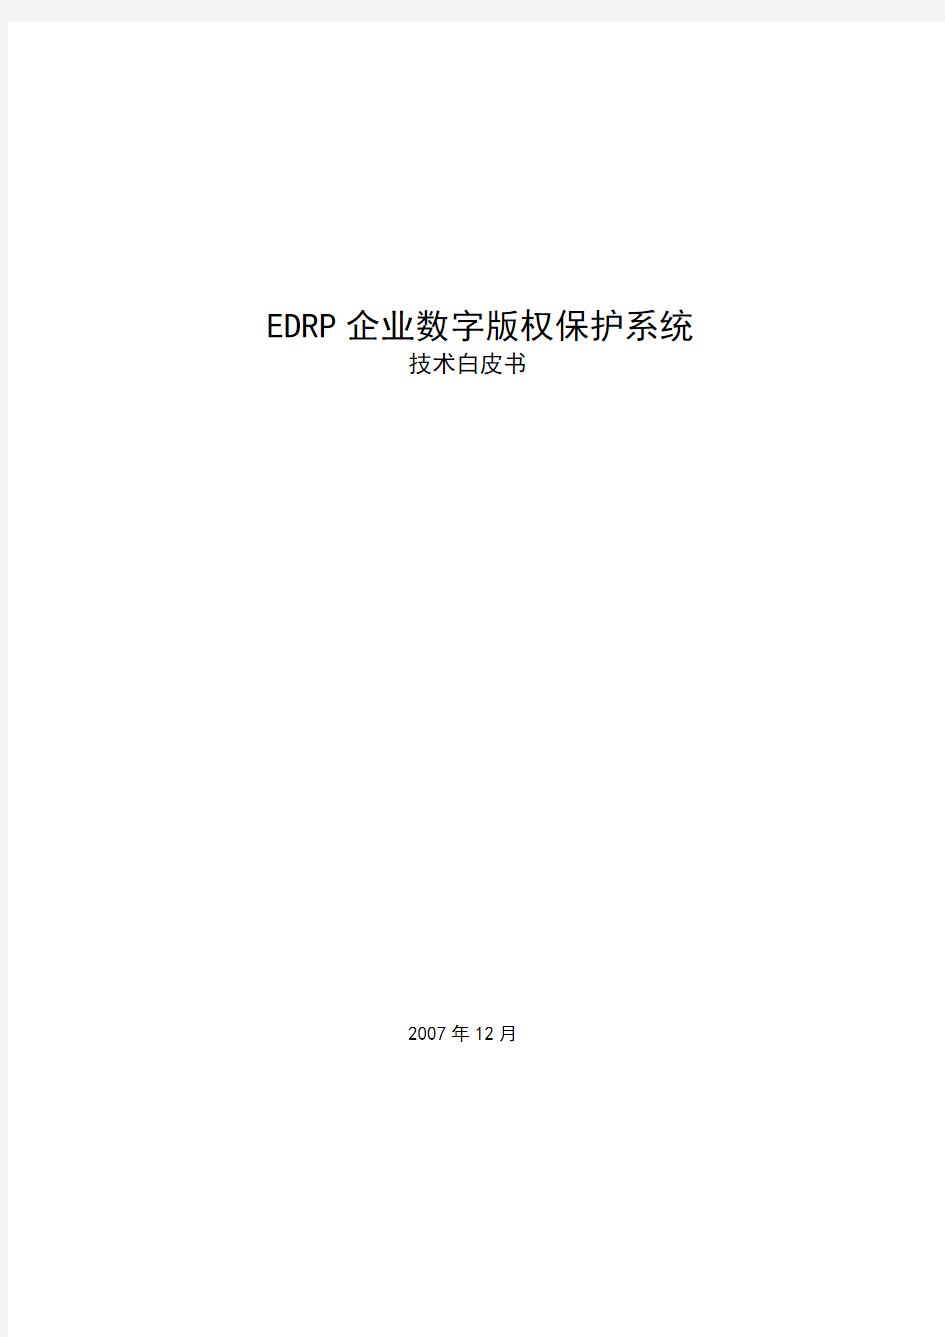 EDRP产品技术白皮书20071218